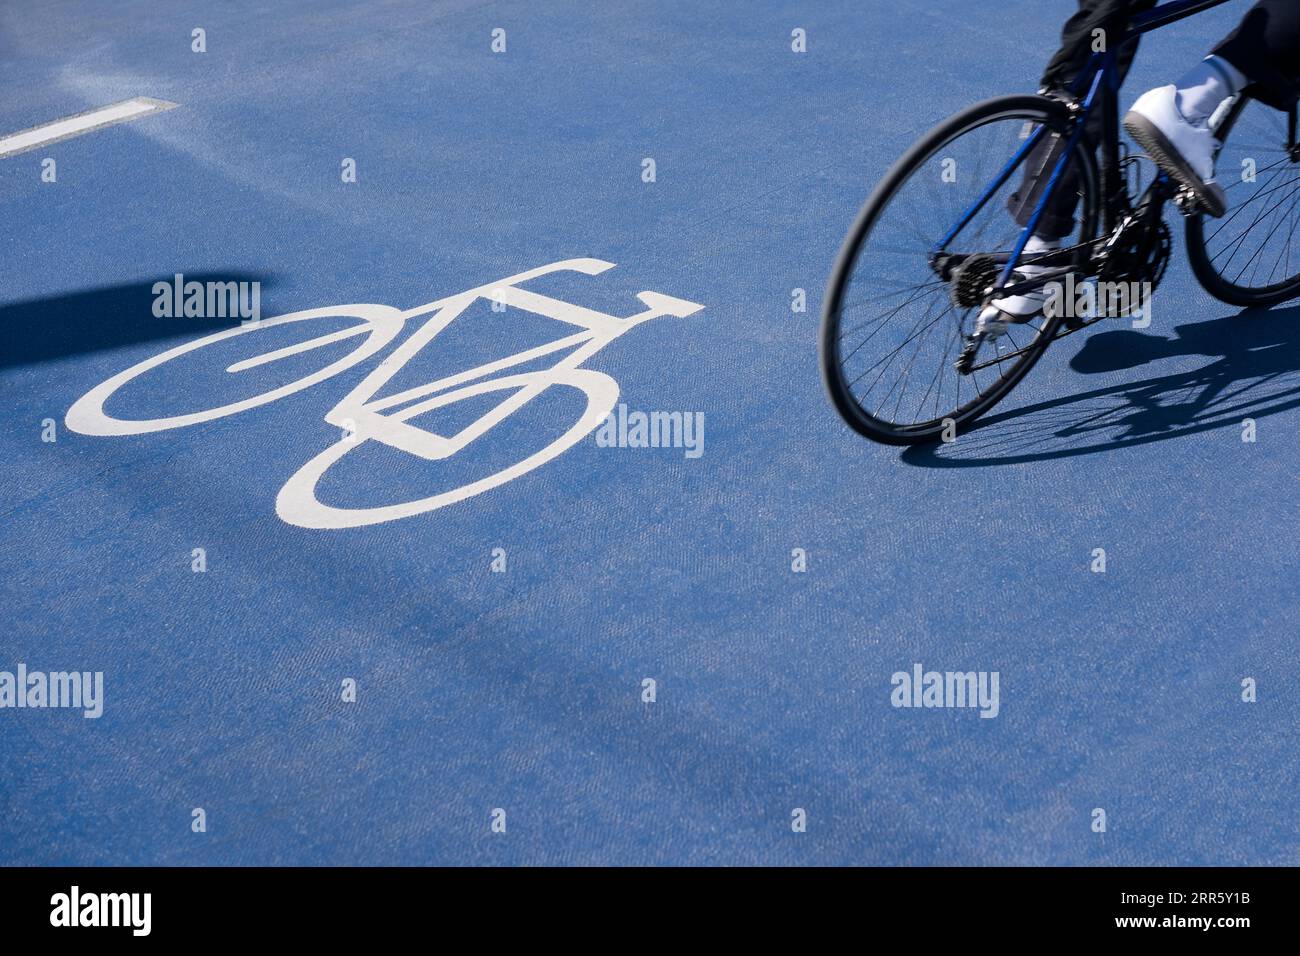 Radfahrer Radfahren auf Fahrradfahrbahn Radfahrer-Boulevard Fahrbahnmarkierung Stockfoto